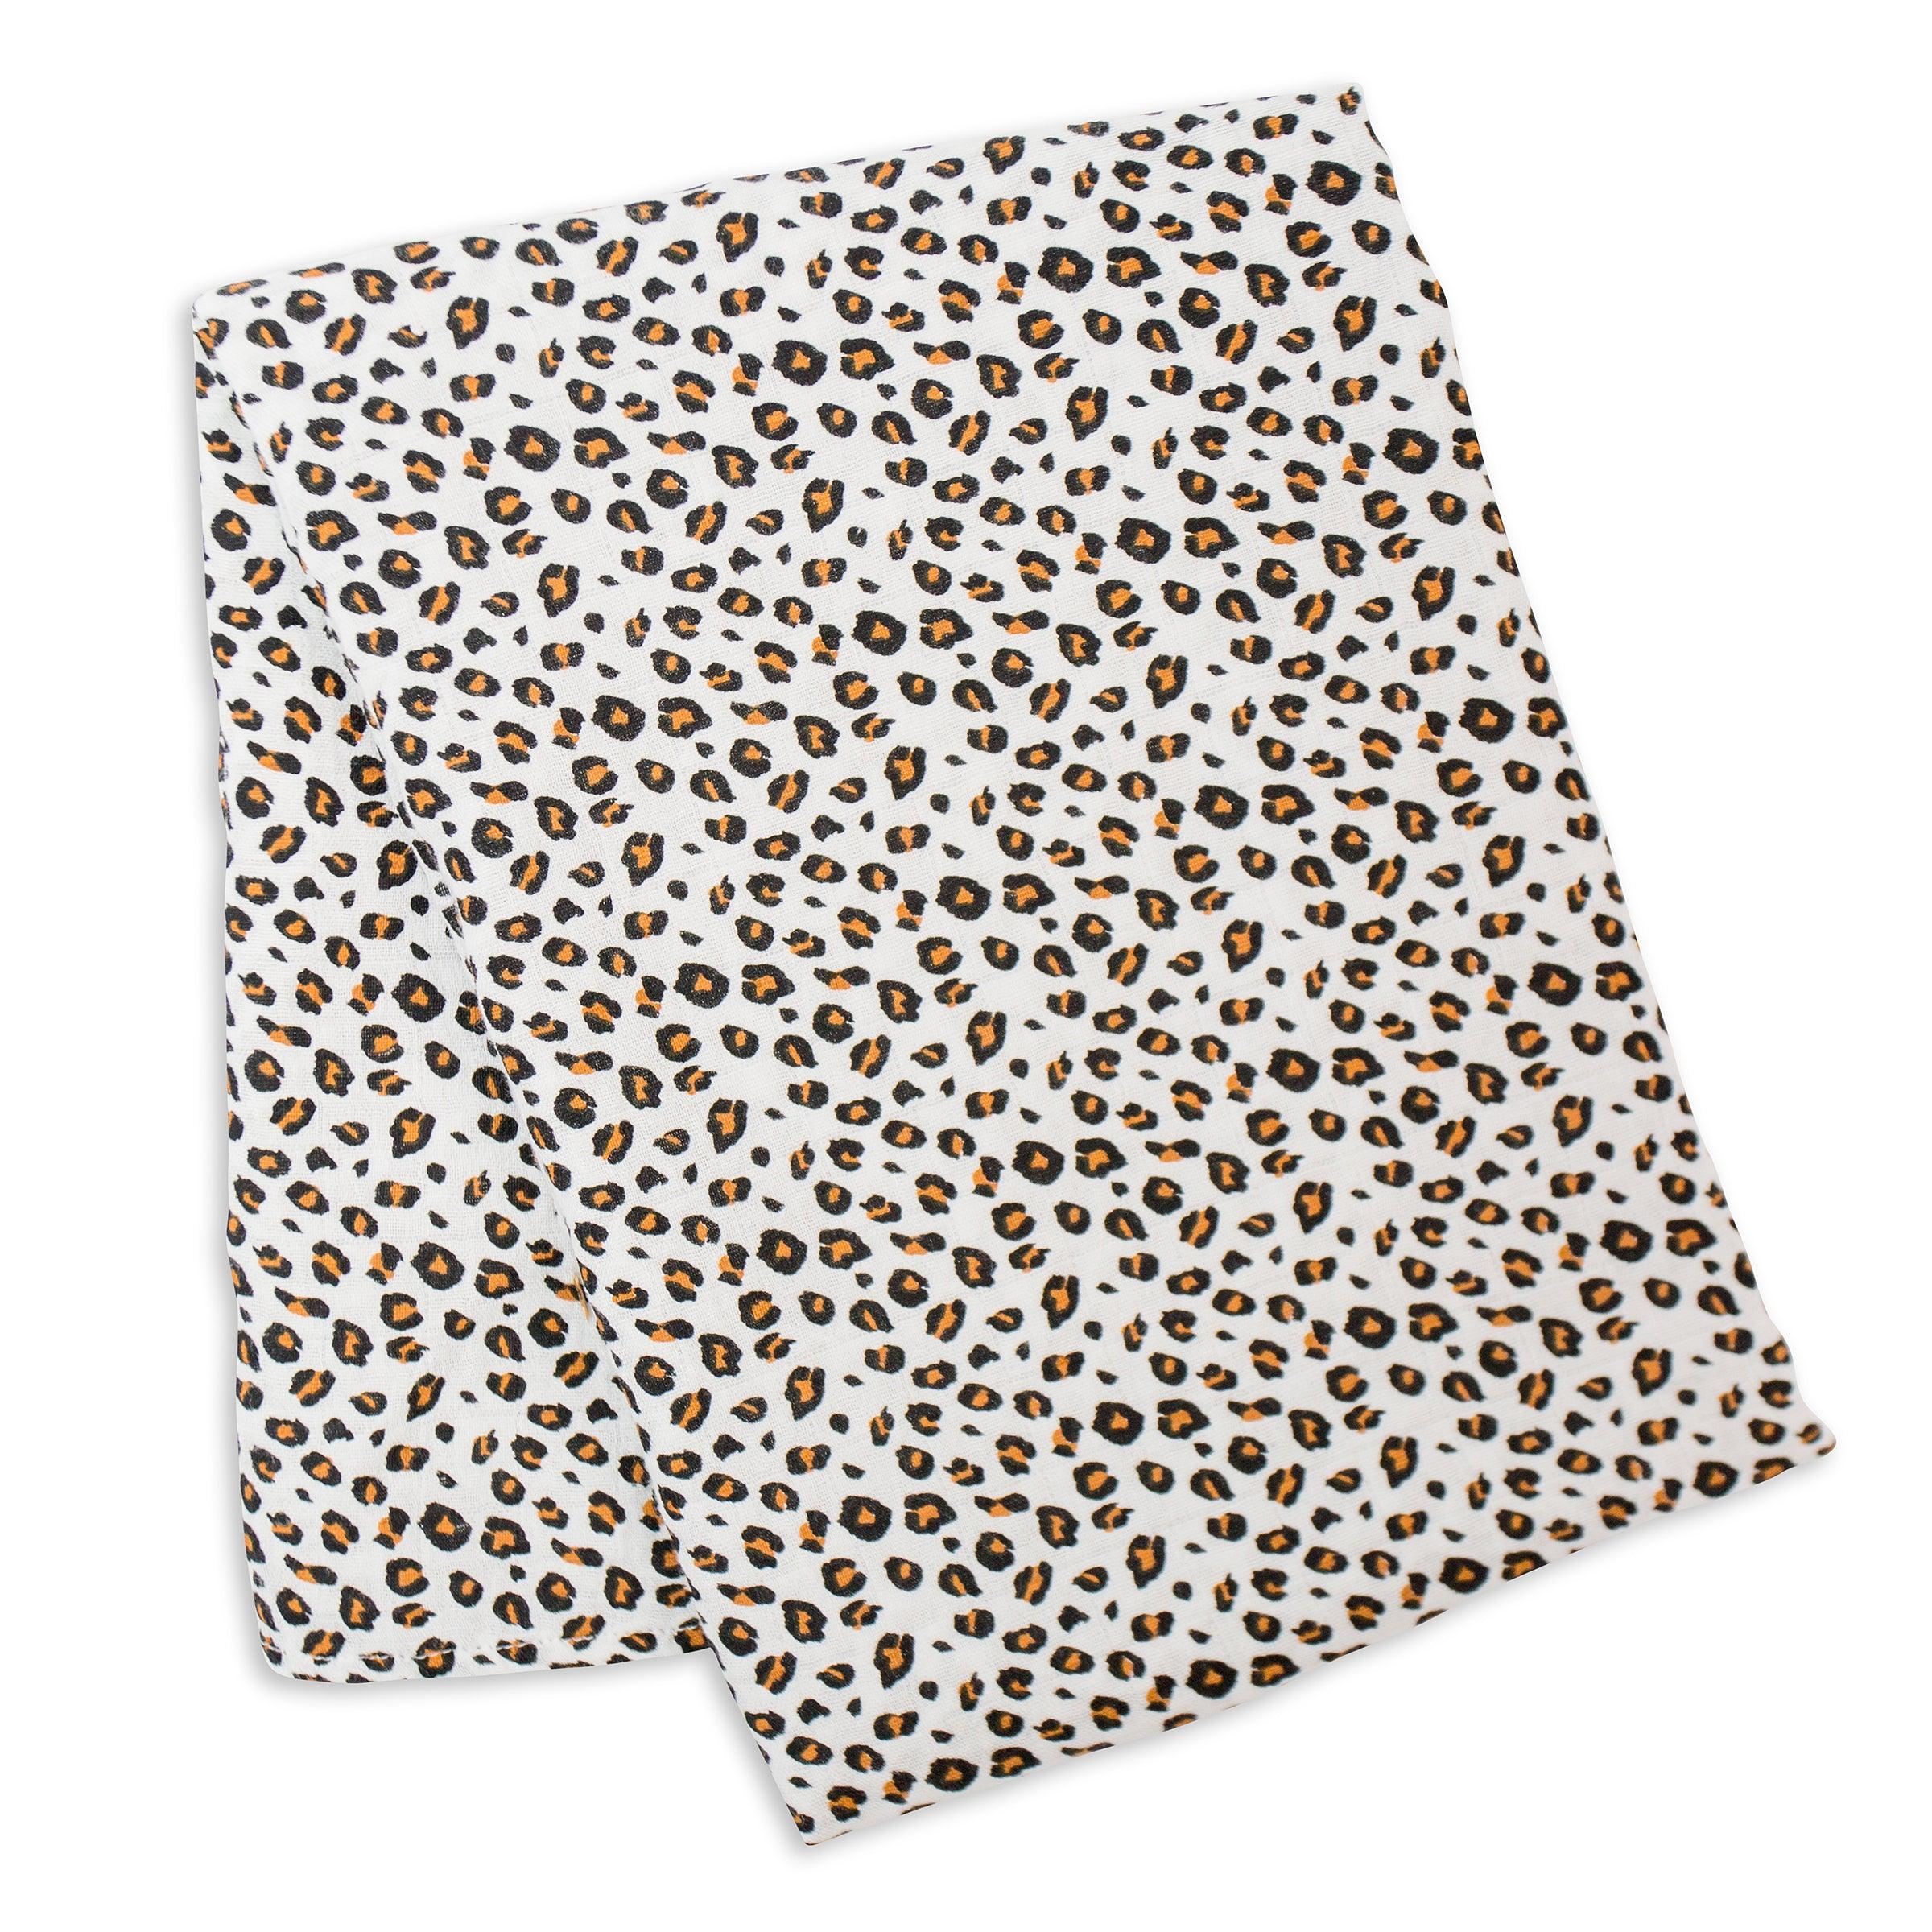 Lulujo - Leopard Cotton Swaddle -Sabanilla Leopardo